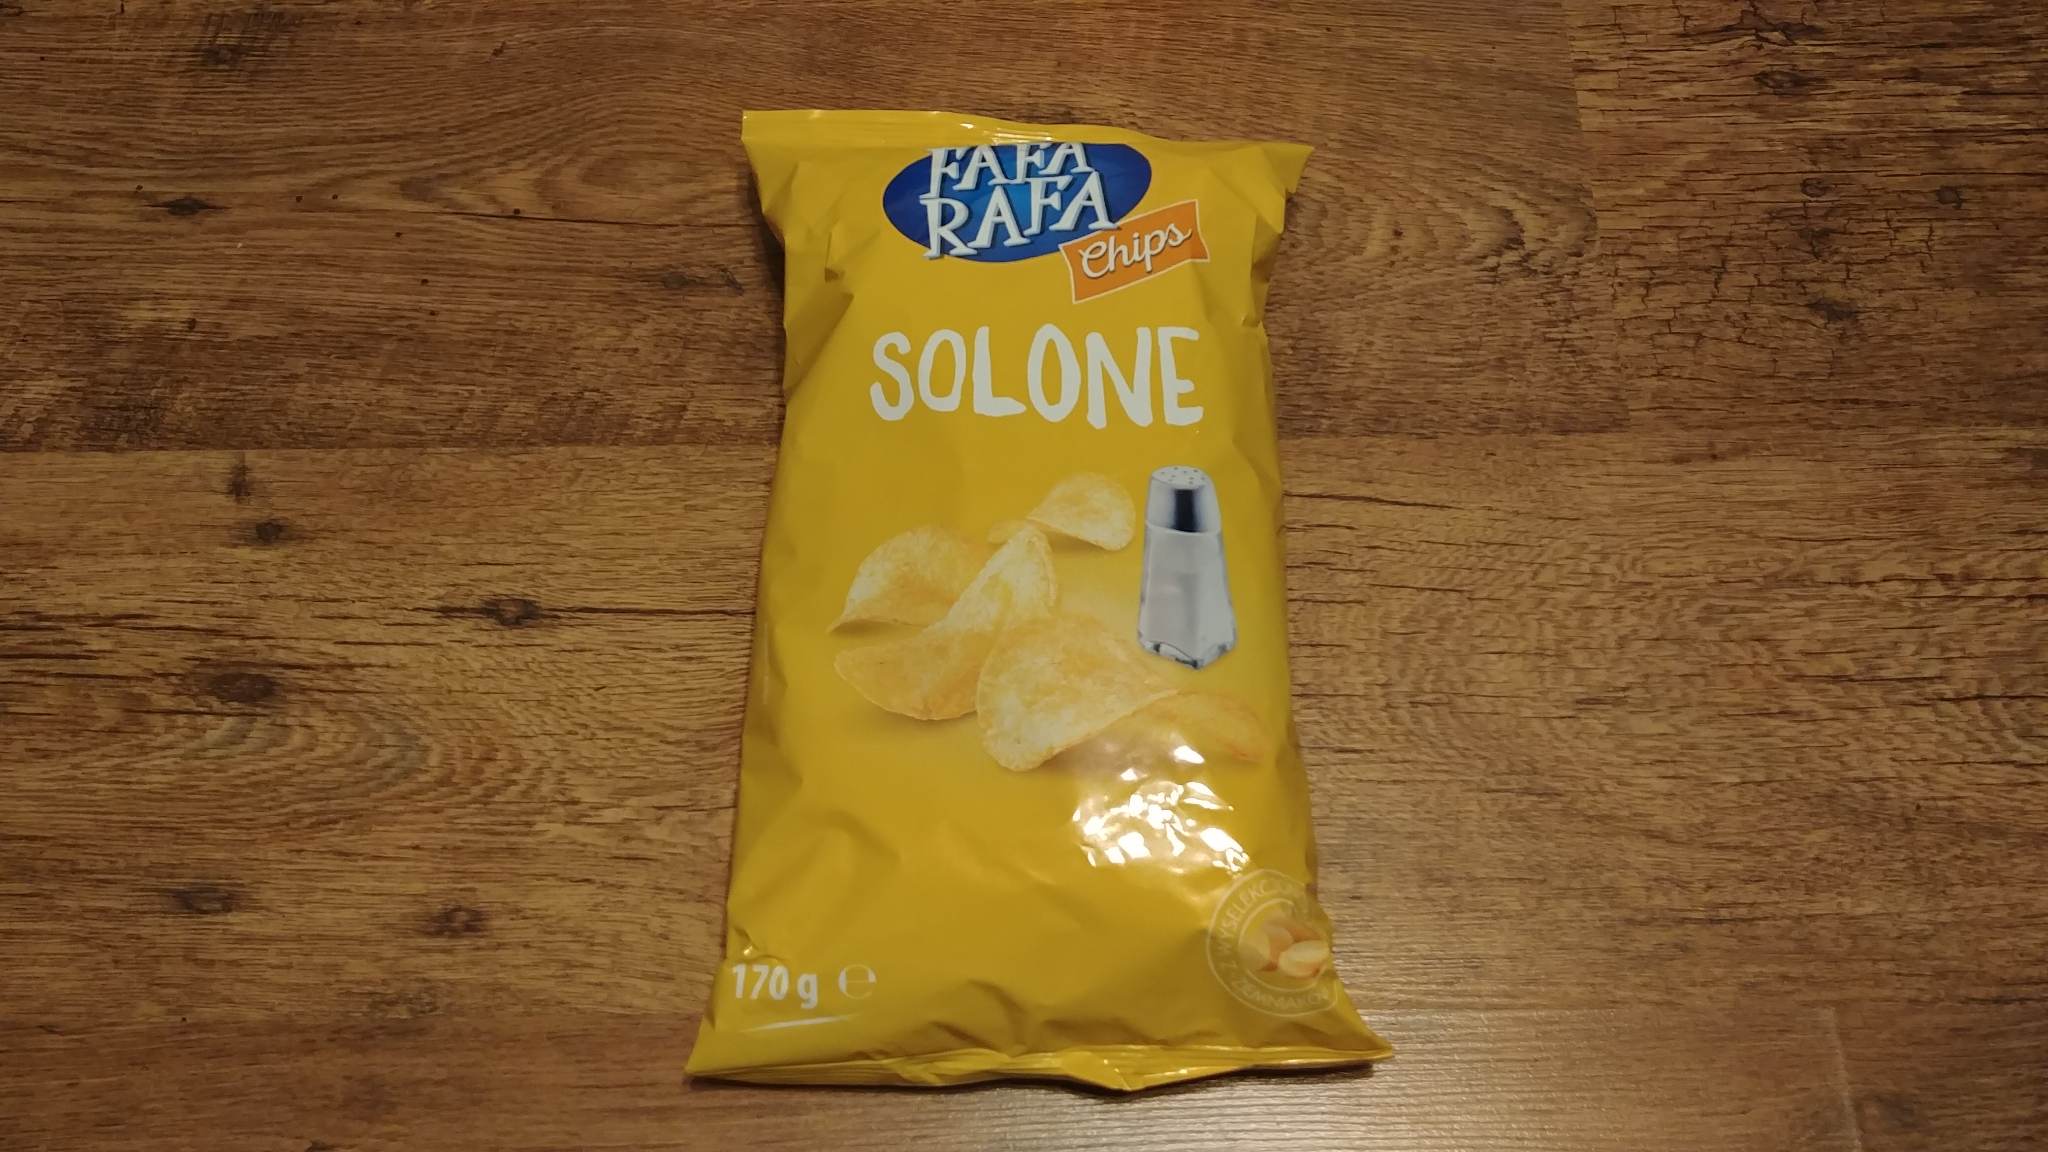 fafa rafa chipsy solone